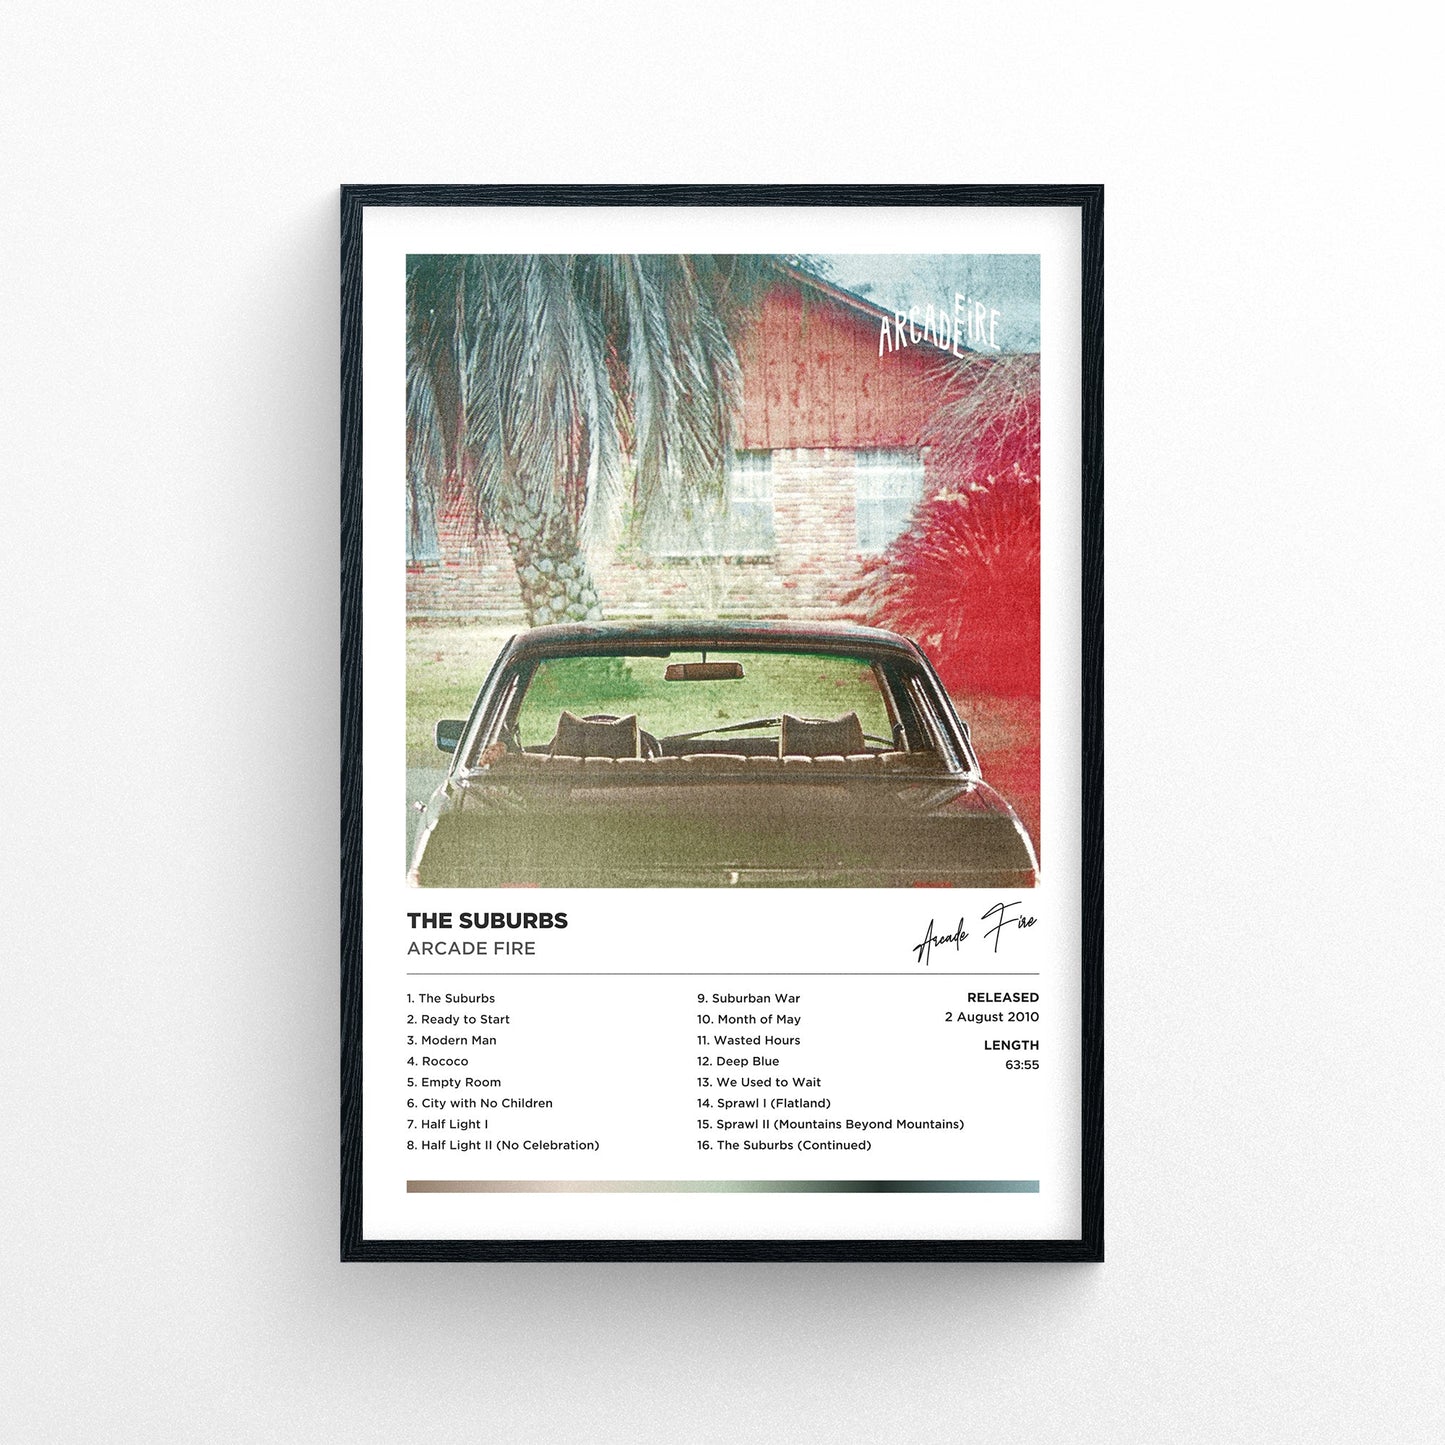 Arcade Fire - The Suburbs Framed Poster Print | Polaroid Style | Album Cover Artwork